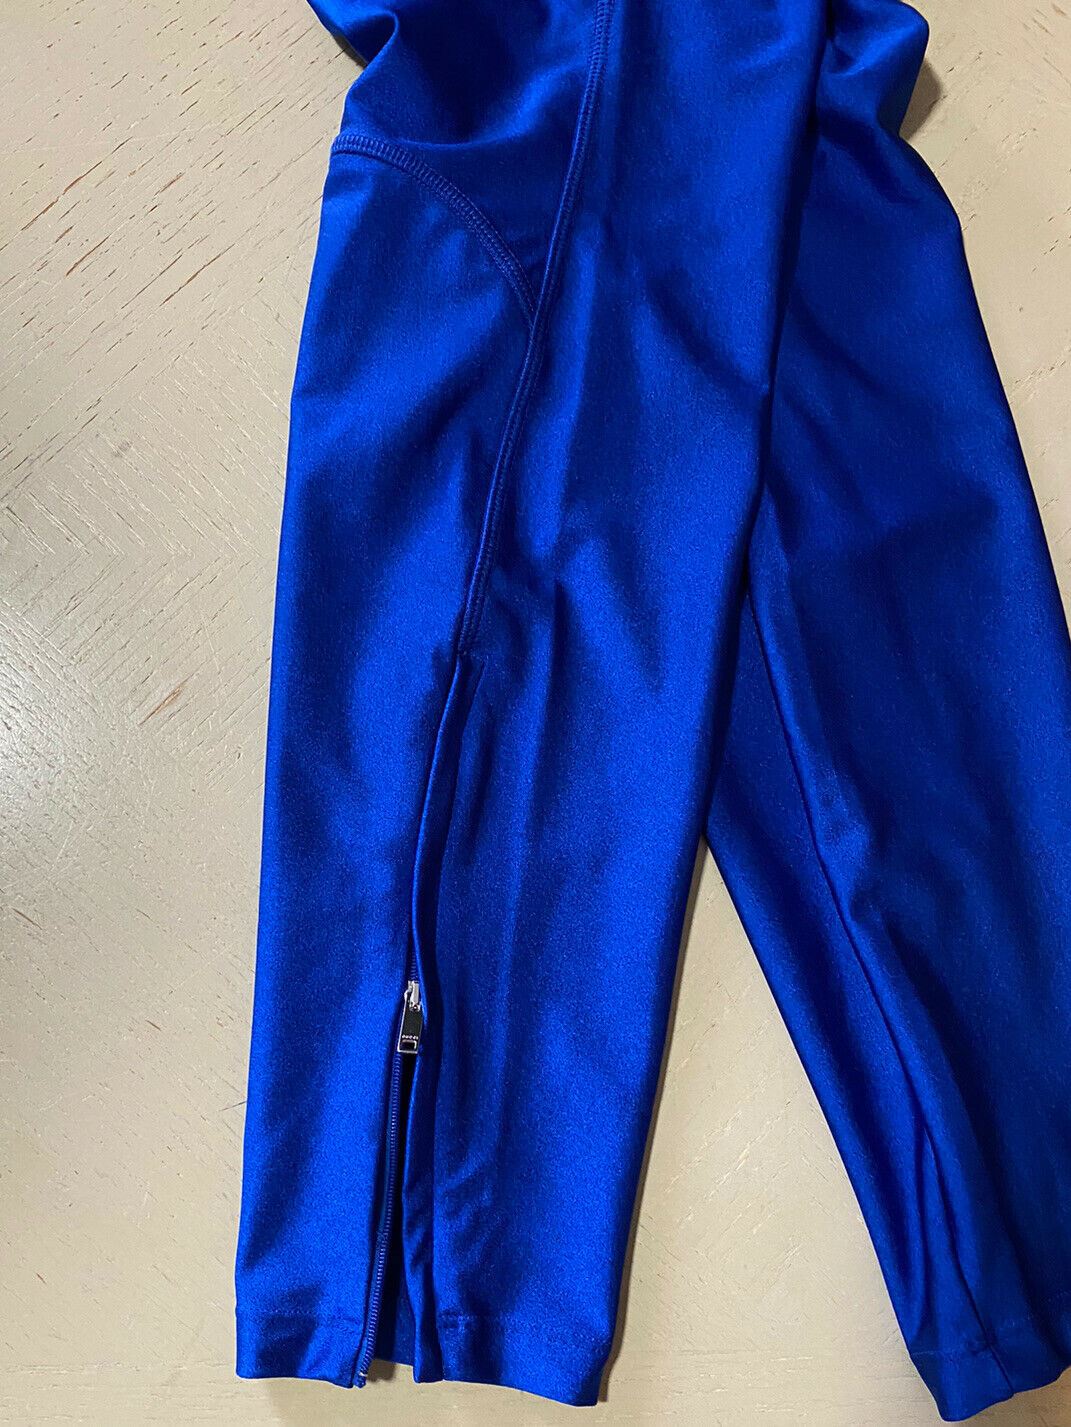 New $1200 Gucci Women's Sweatpants Pants Blue Size XL Italy